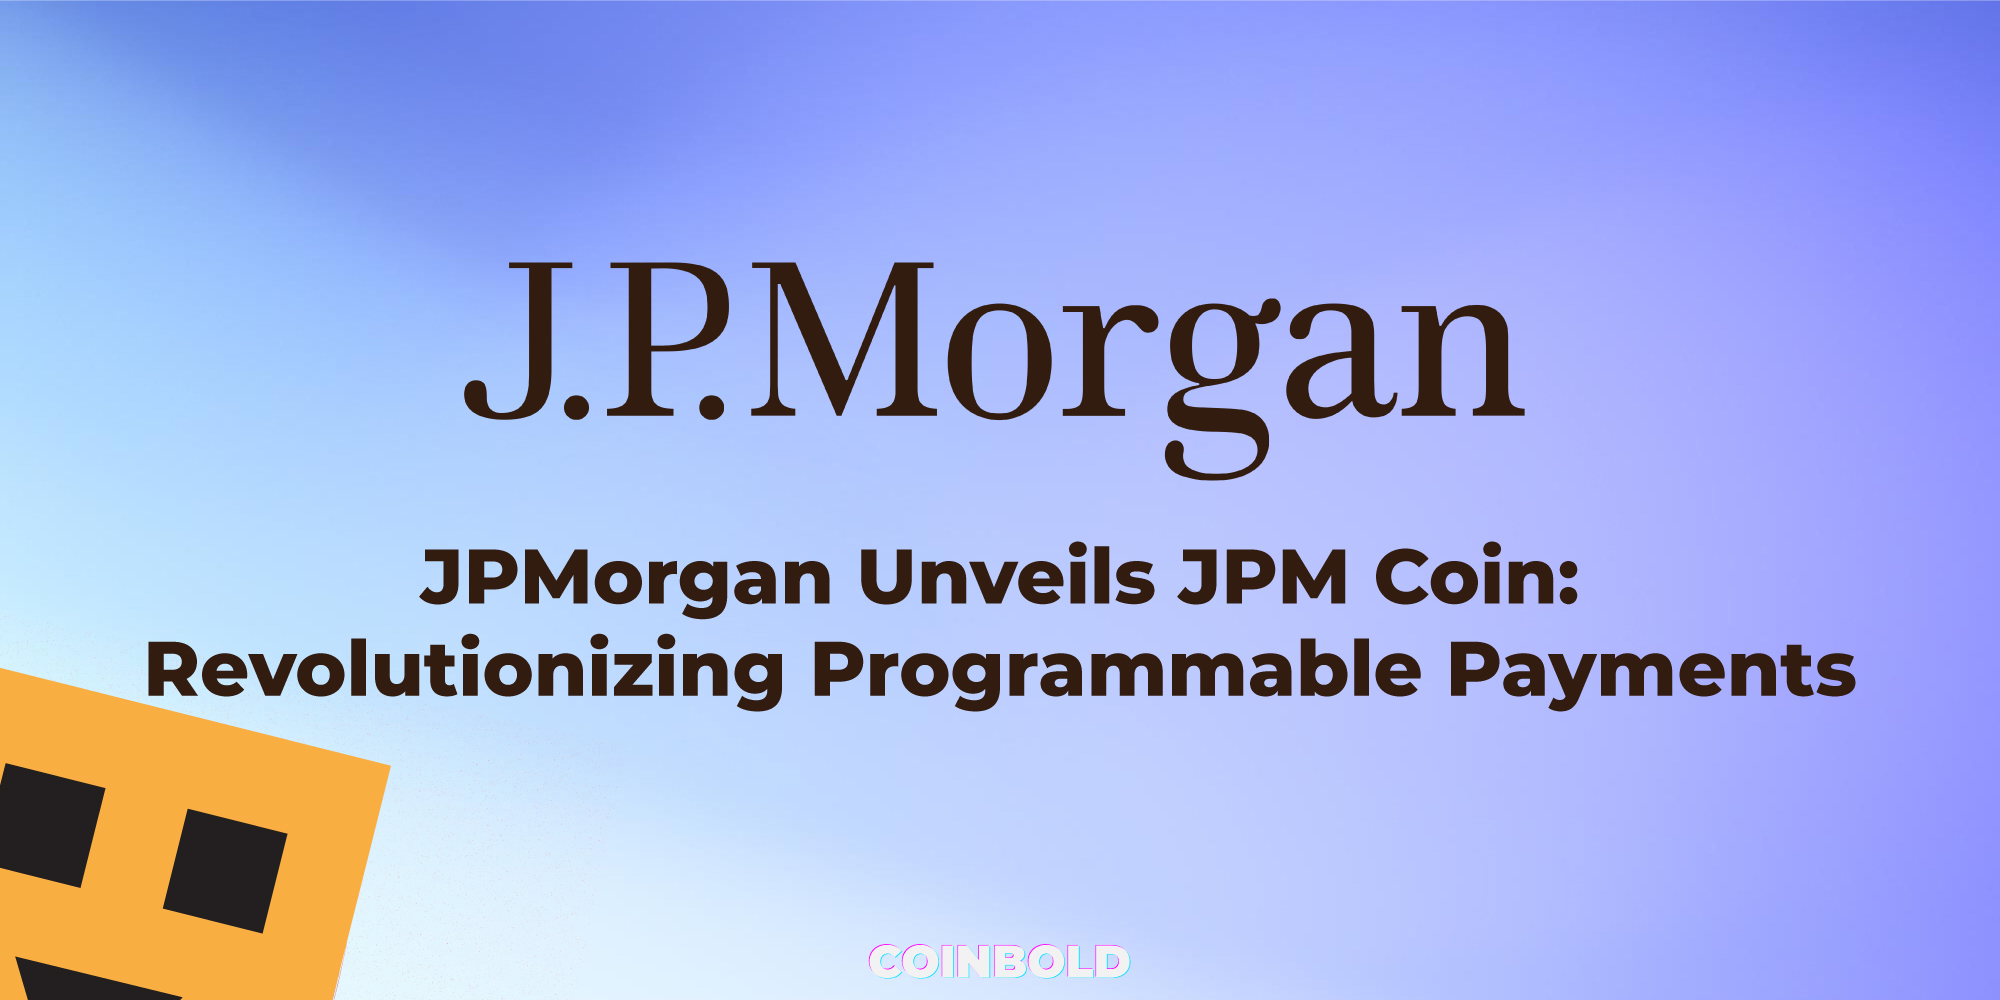 JPMorgan Unveils JPM Coin Revolutionizing Programmable Payments